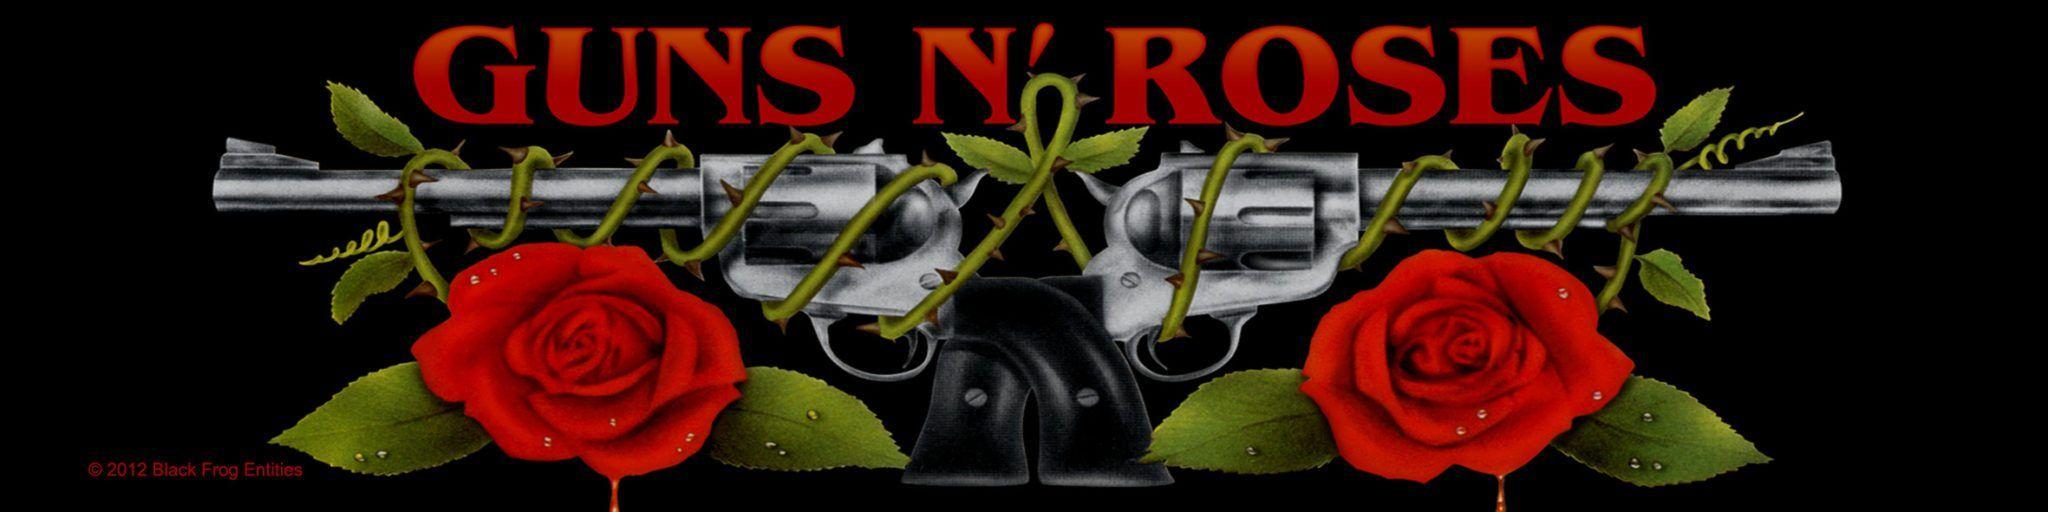 Guns N' Roses Logo - Guns N Roses Woven Superstrip Logo/Roses